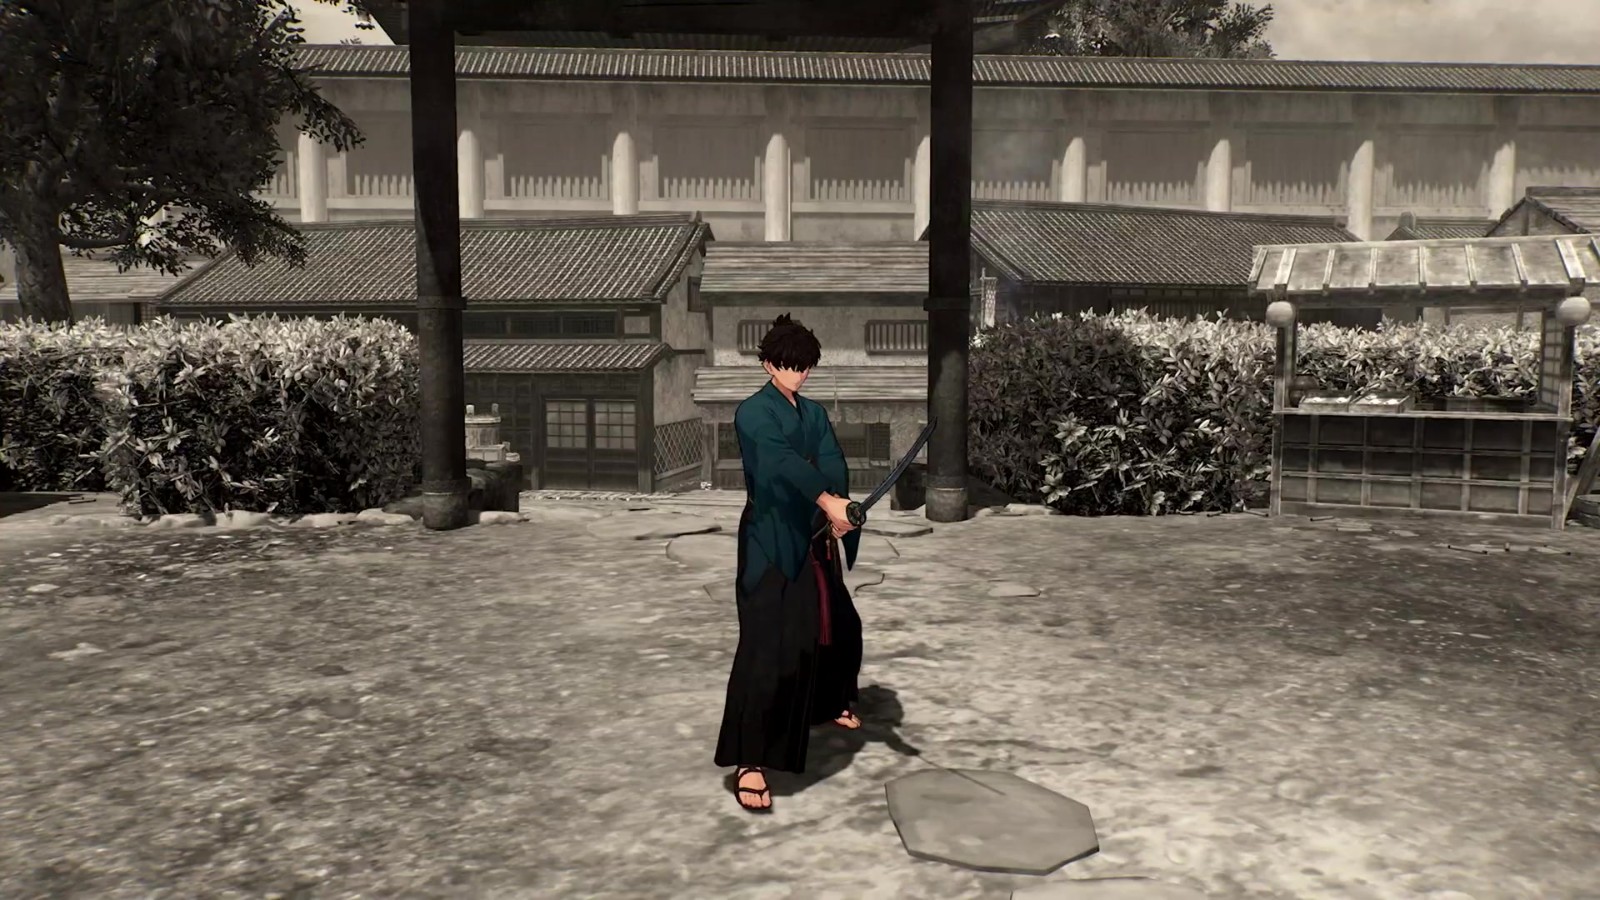 《Fate/Samurai Remnant》预告片展示丰富战斗